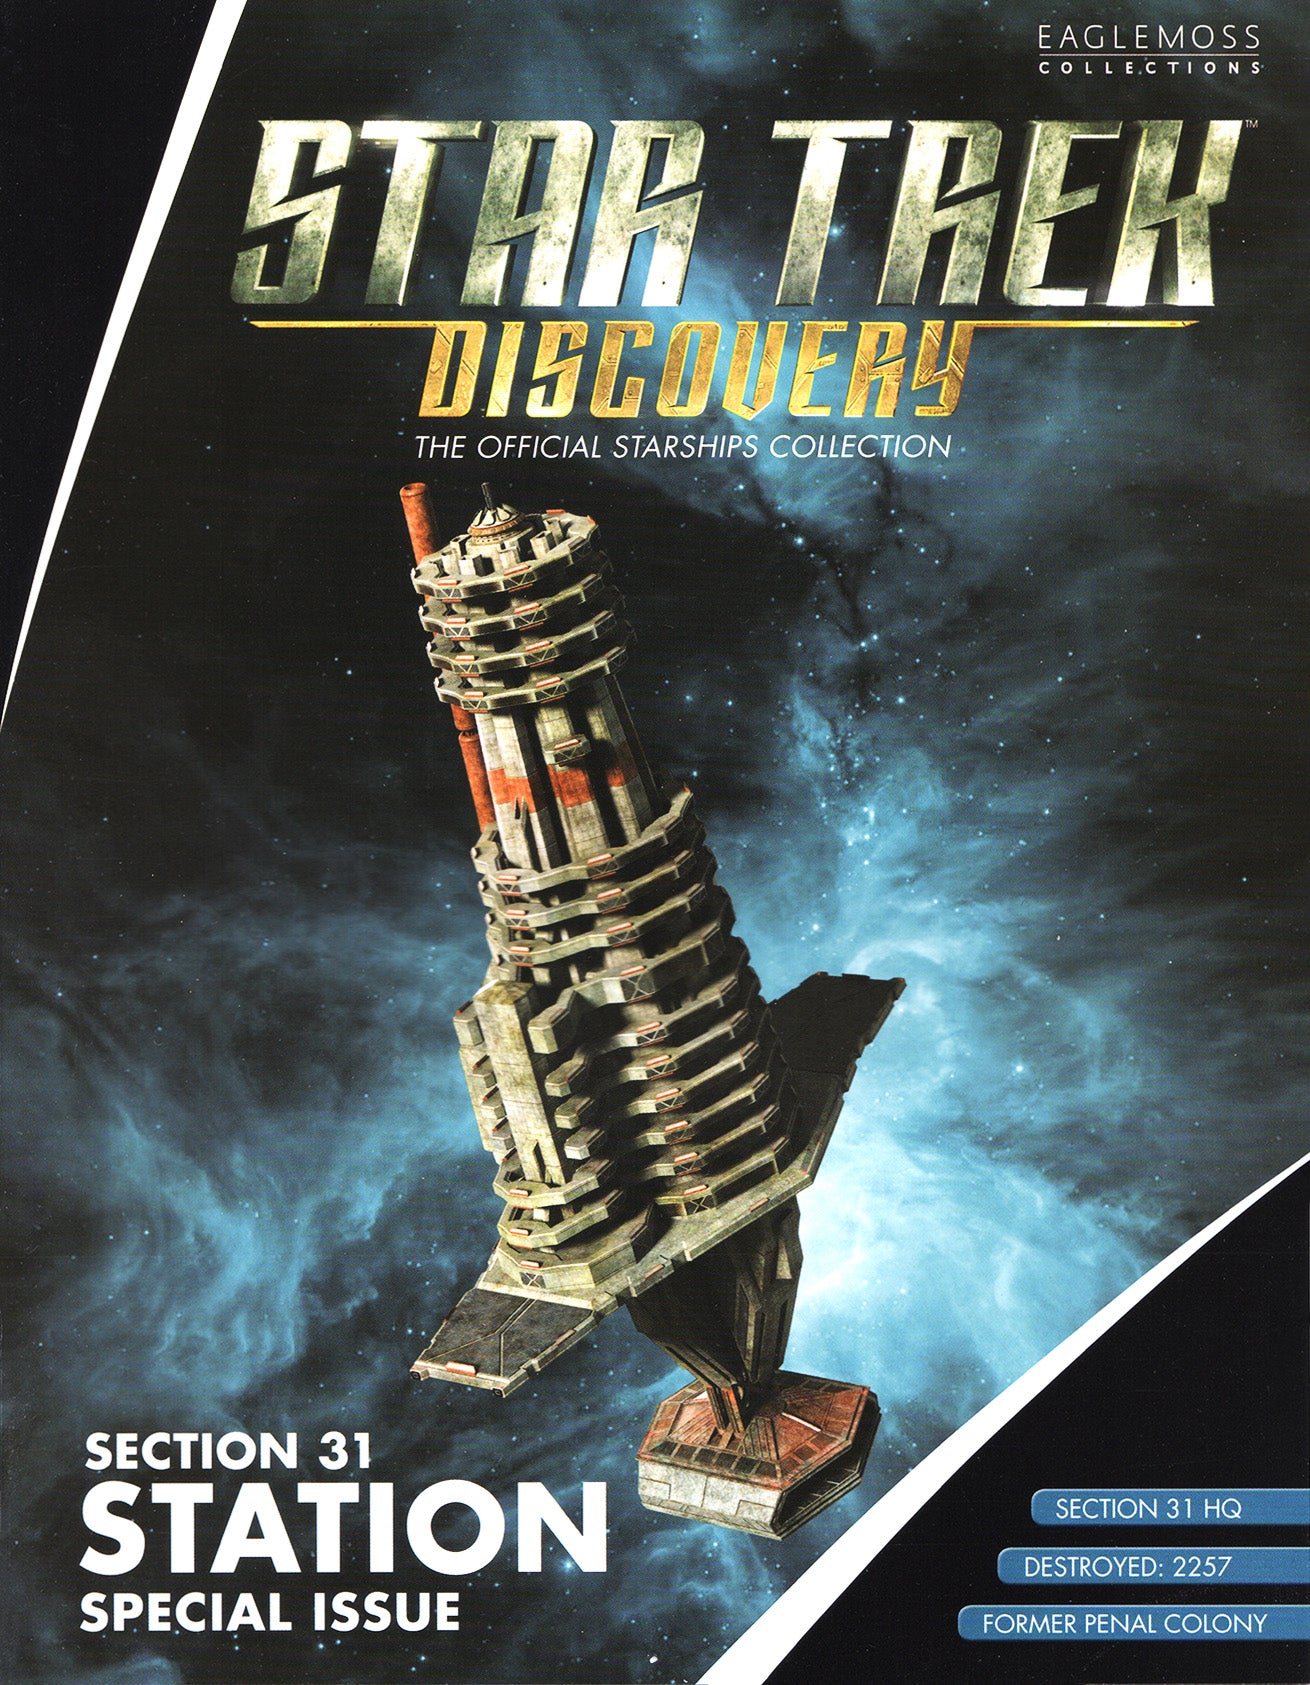 #03 Section 31 Headquarters Model Diecast Ship Discovery SPECIAL EDITION (Eaglemoss / Star Trek)